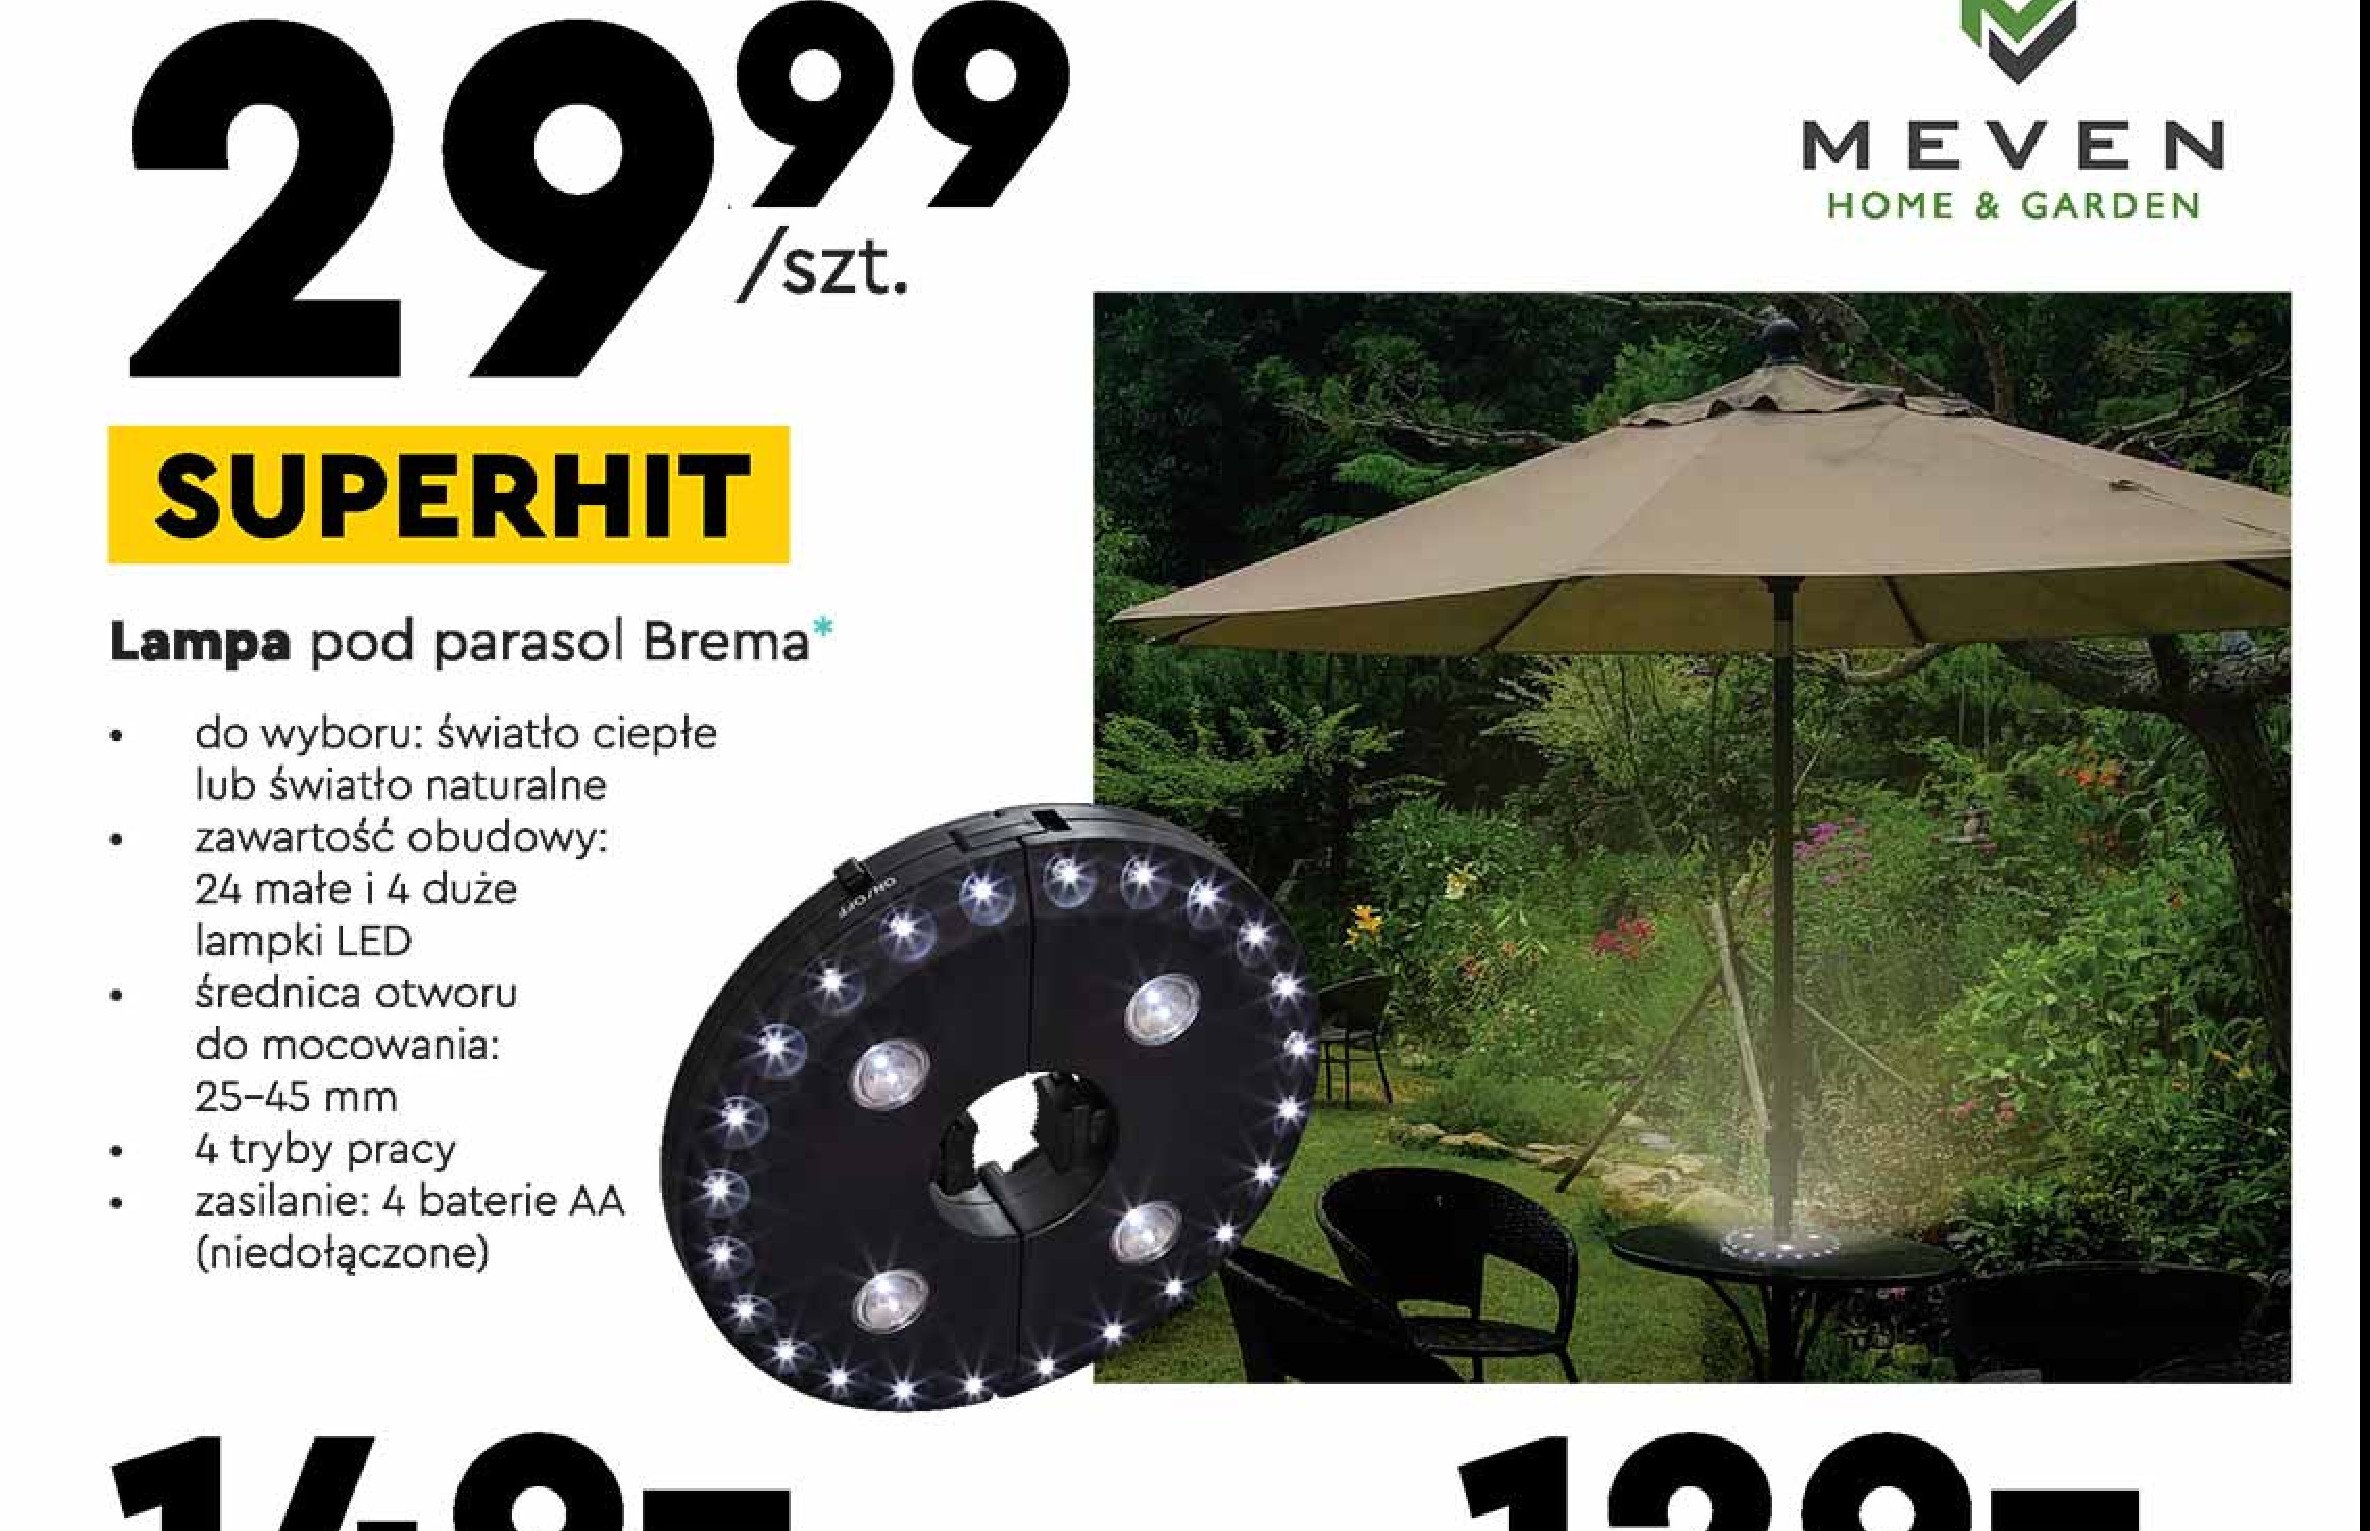 Lampa pod parasol brema światło ciepłe MEVEN promocja